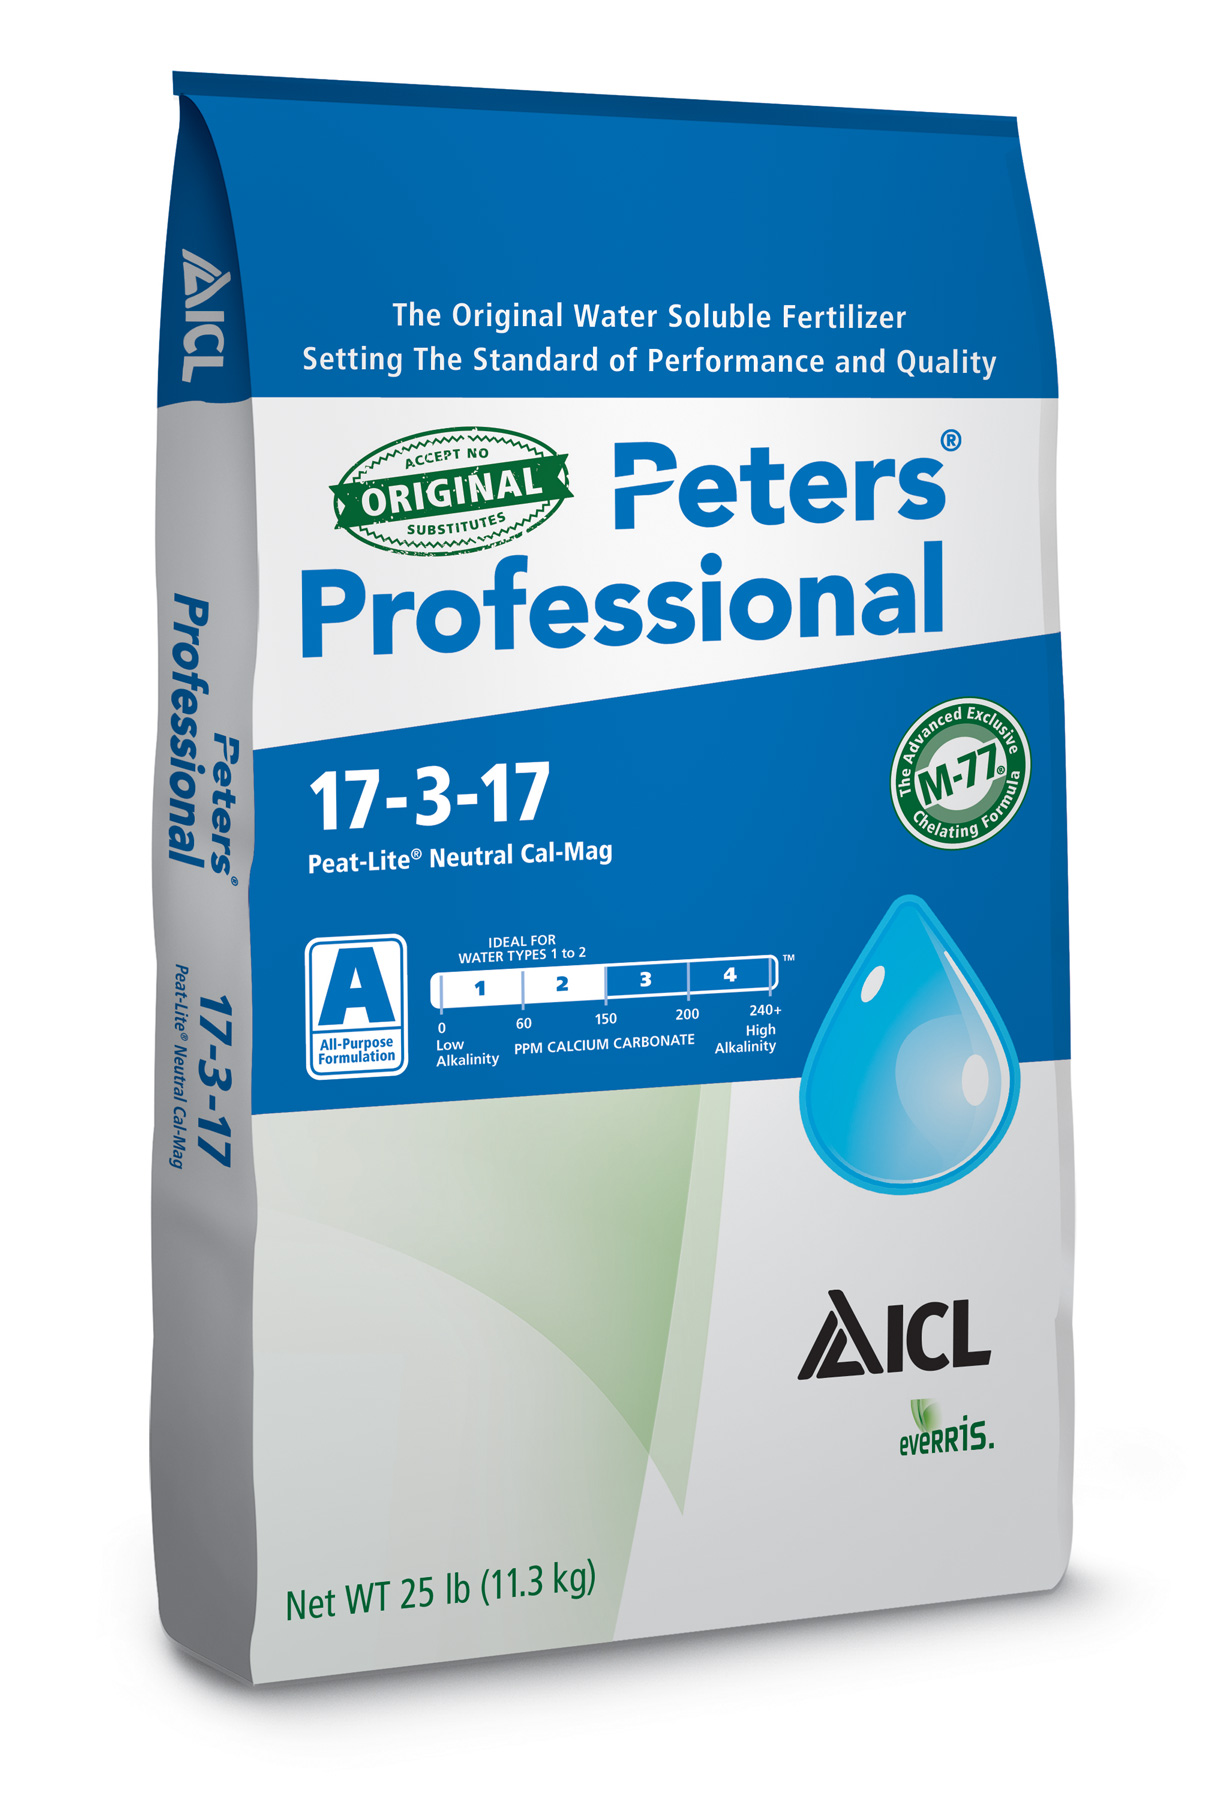 Peters Professional 17-3-17 Peat-Lite Neutral Cal-Mag 25 lb Bag - Water Soluble Fertilizer